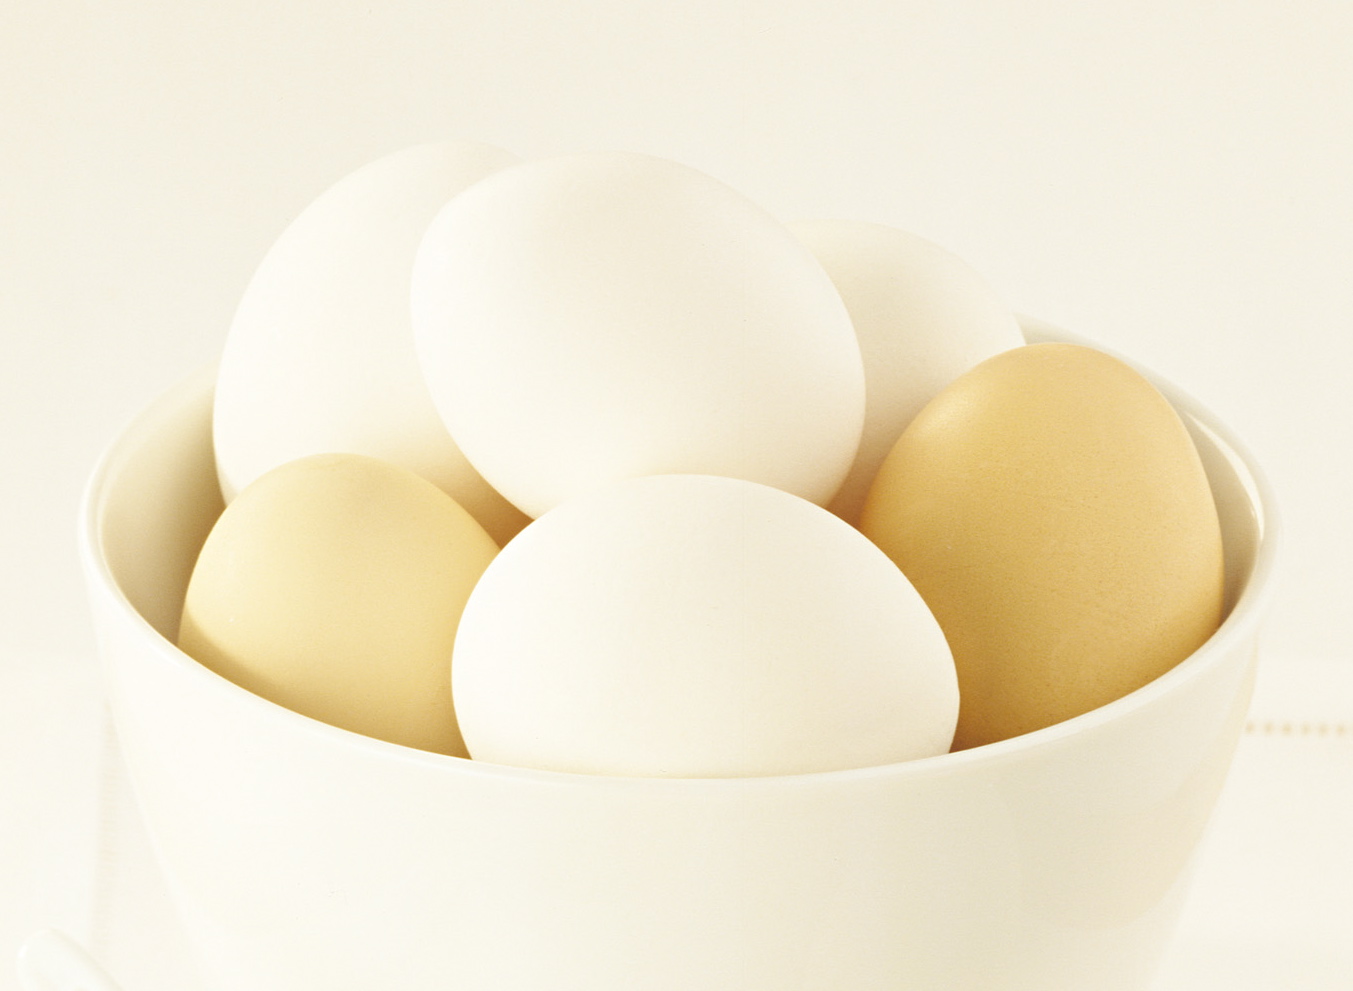 Bowl of eggs